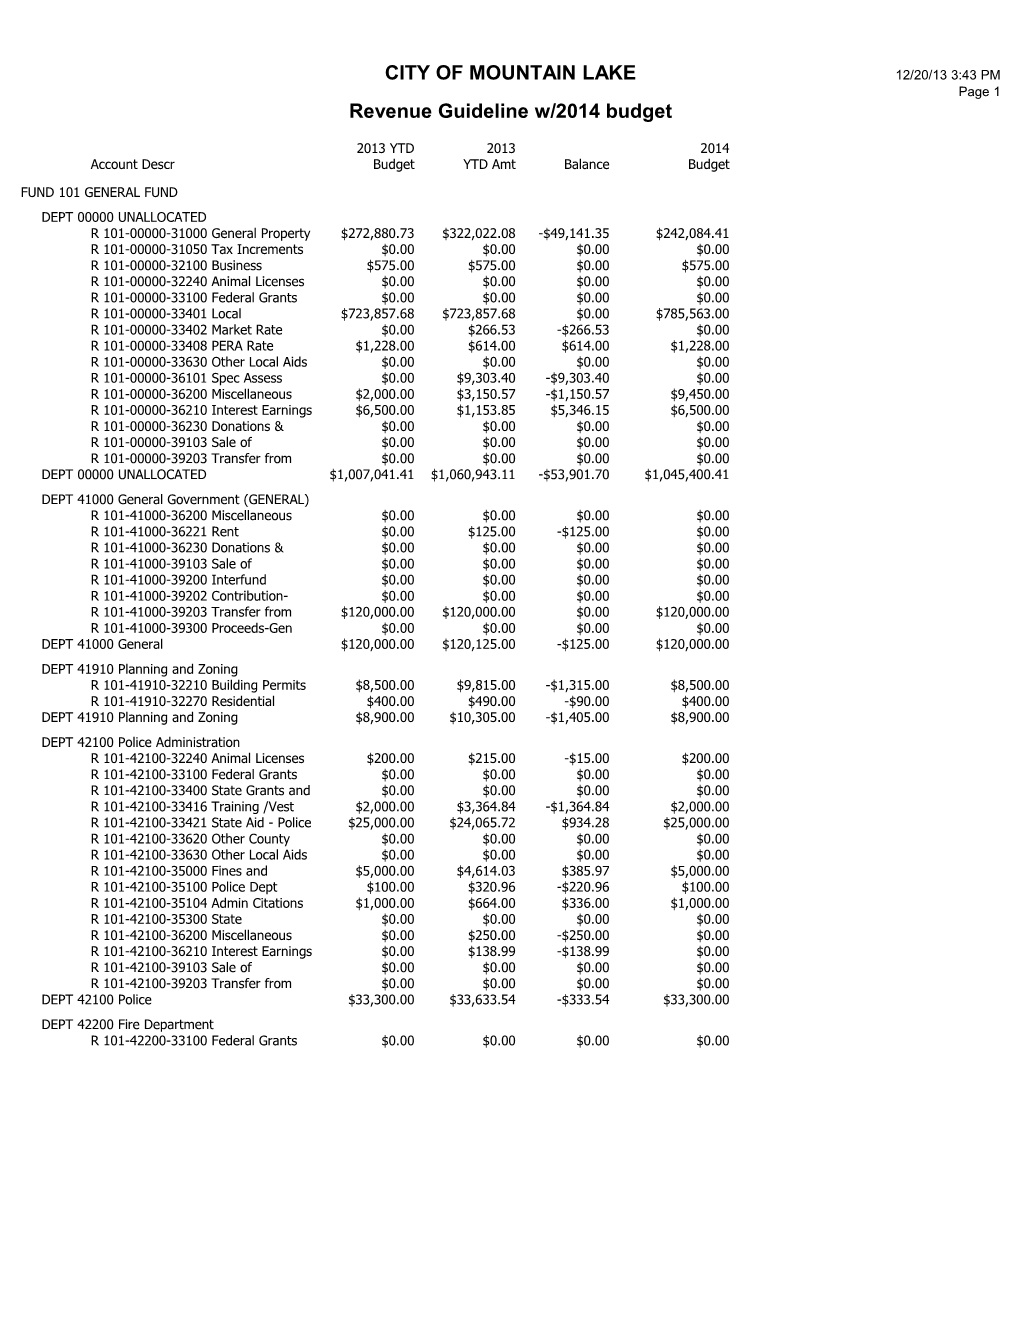 Revenue Guideline W/2014 Budget